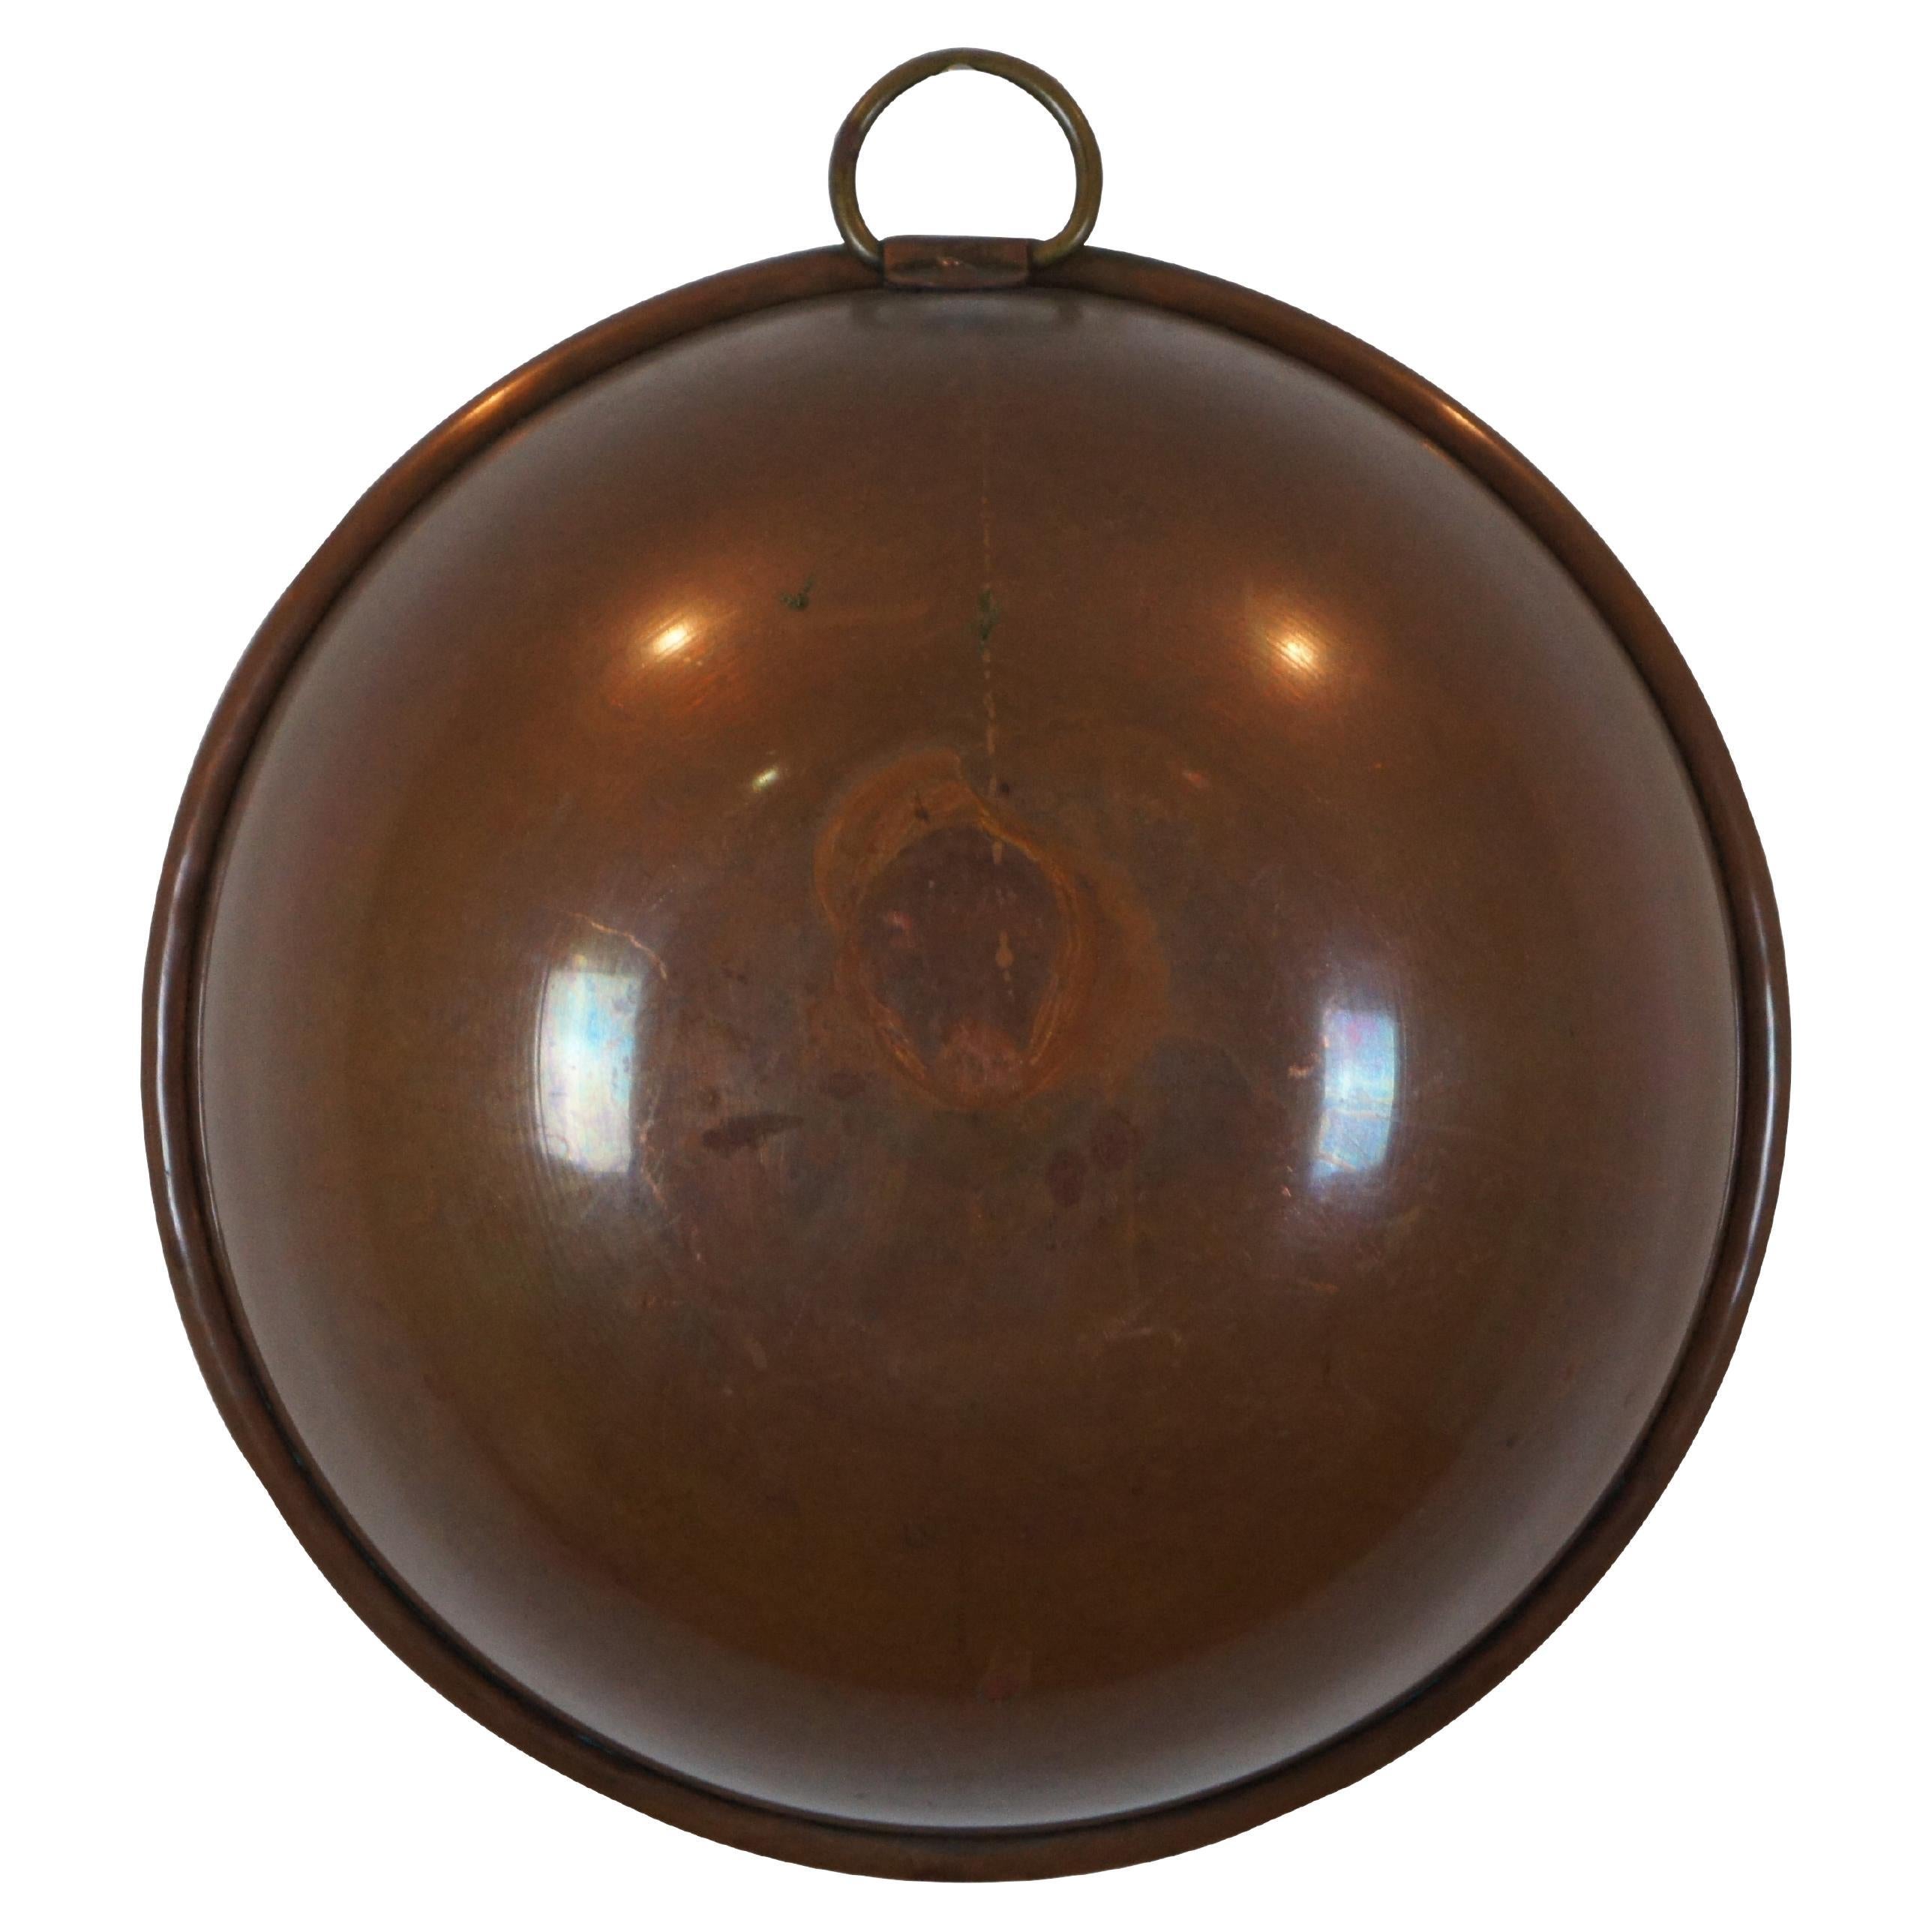 Vintage Spun Copper Farmhouse Mixing Bowl Rolled Edge w Brass Hanging Ring